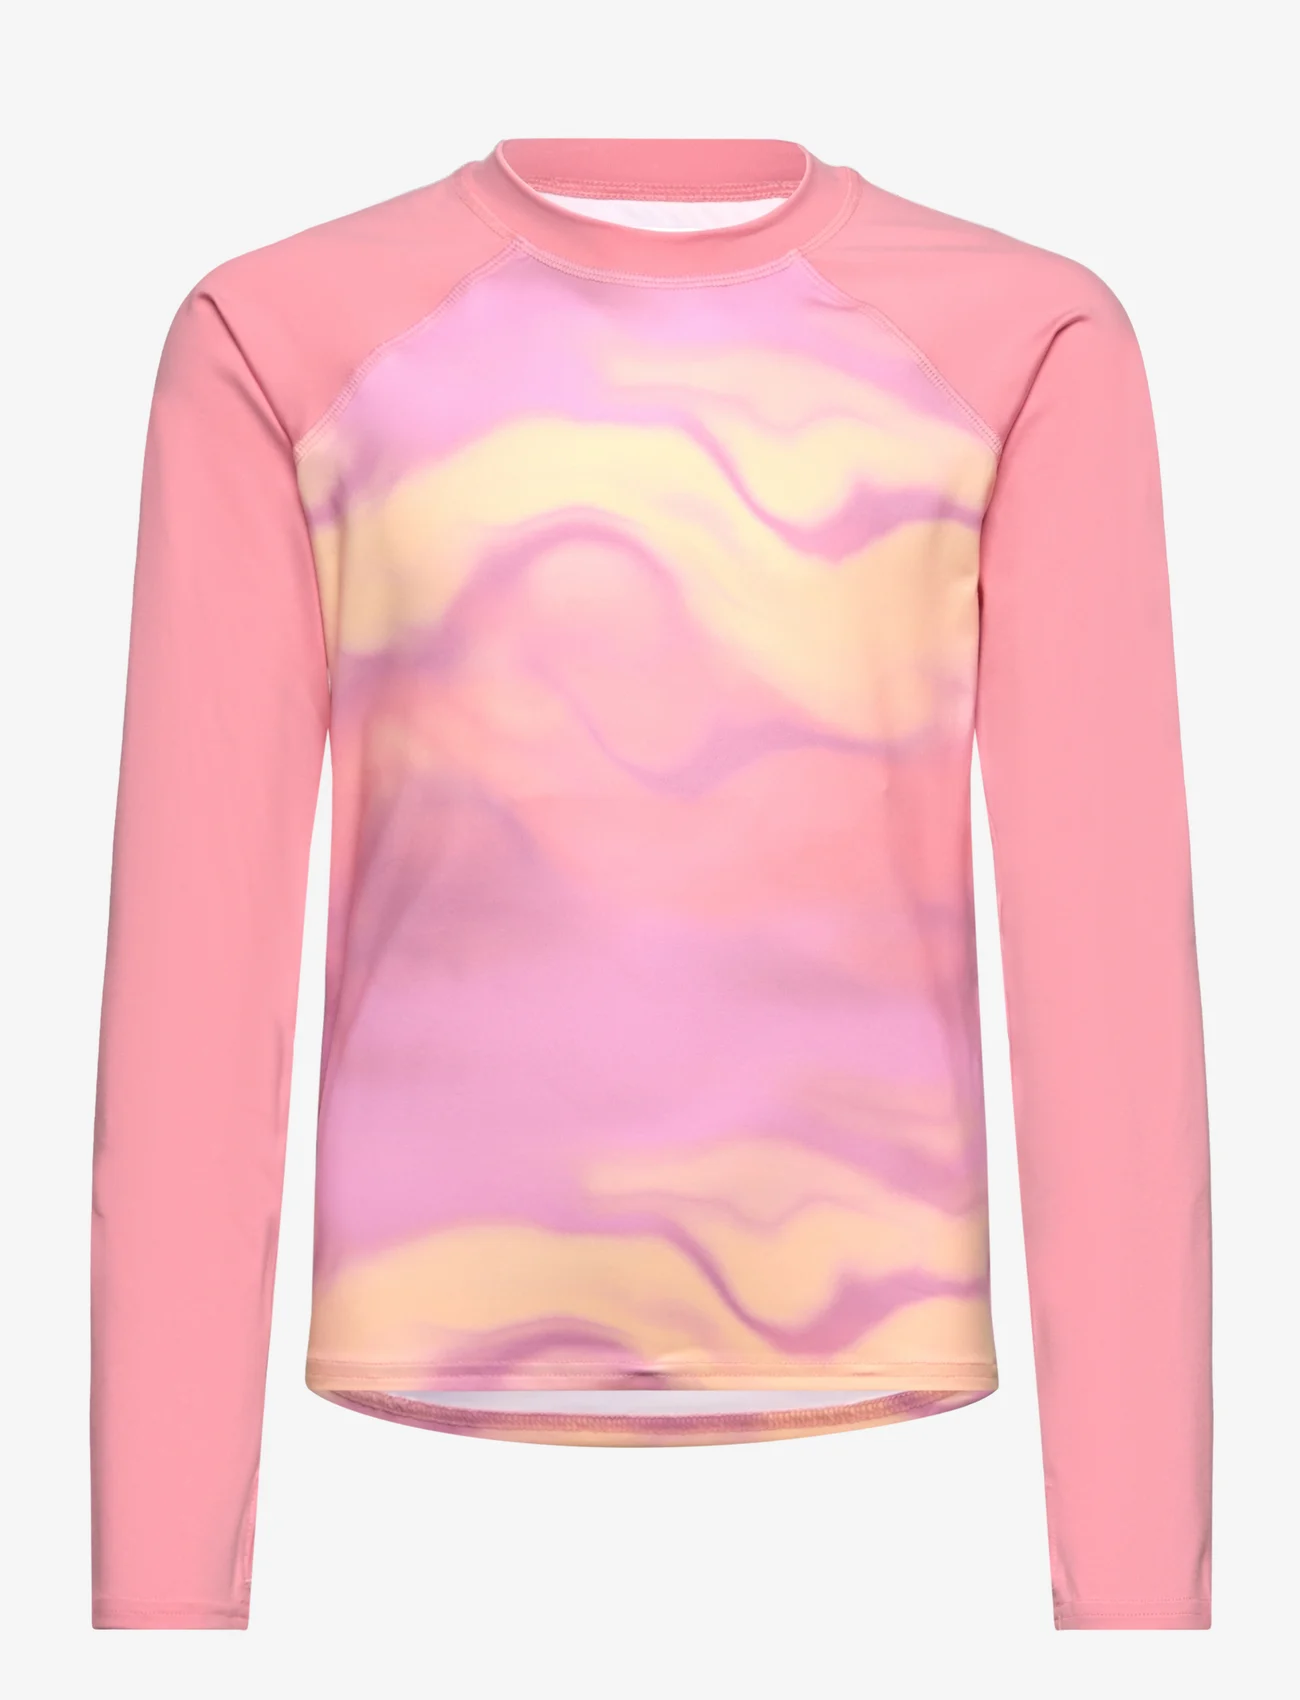 Columbia Sportswear - Sandy Shores Printed LS Sunguard - vasaros pasiūlymai - salmon rose undercurrent, cosmos - 0